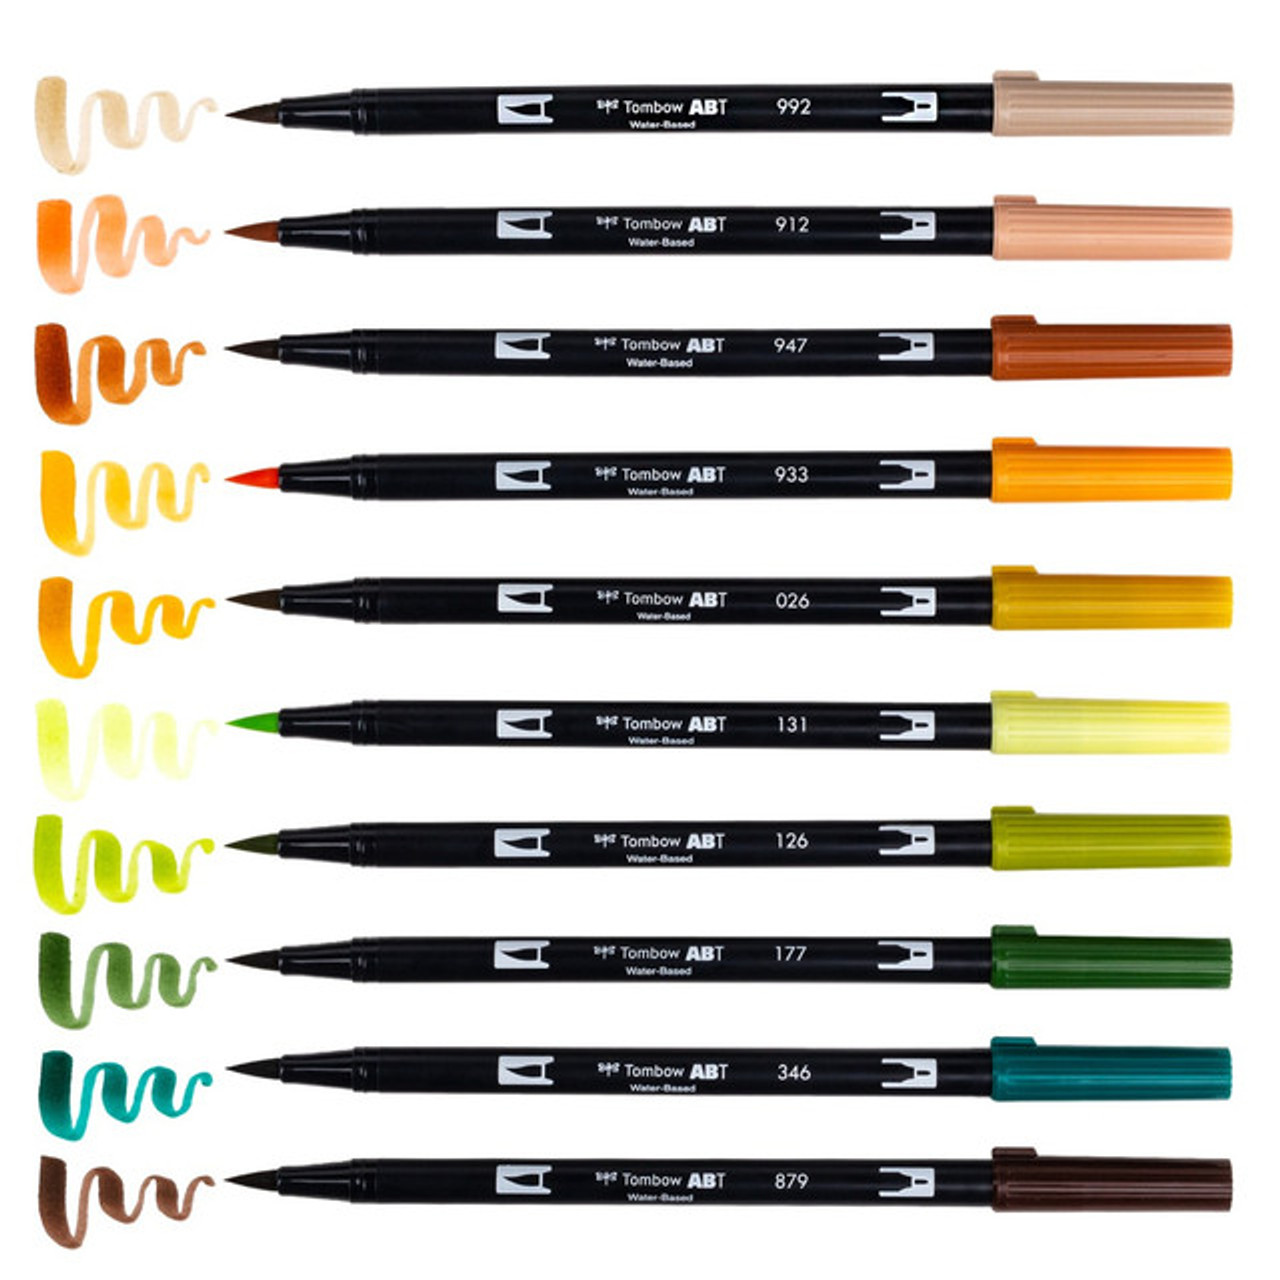 Aen Art Double Line Outline Pens, 26 Colors Shimmer Marker for